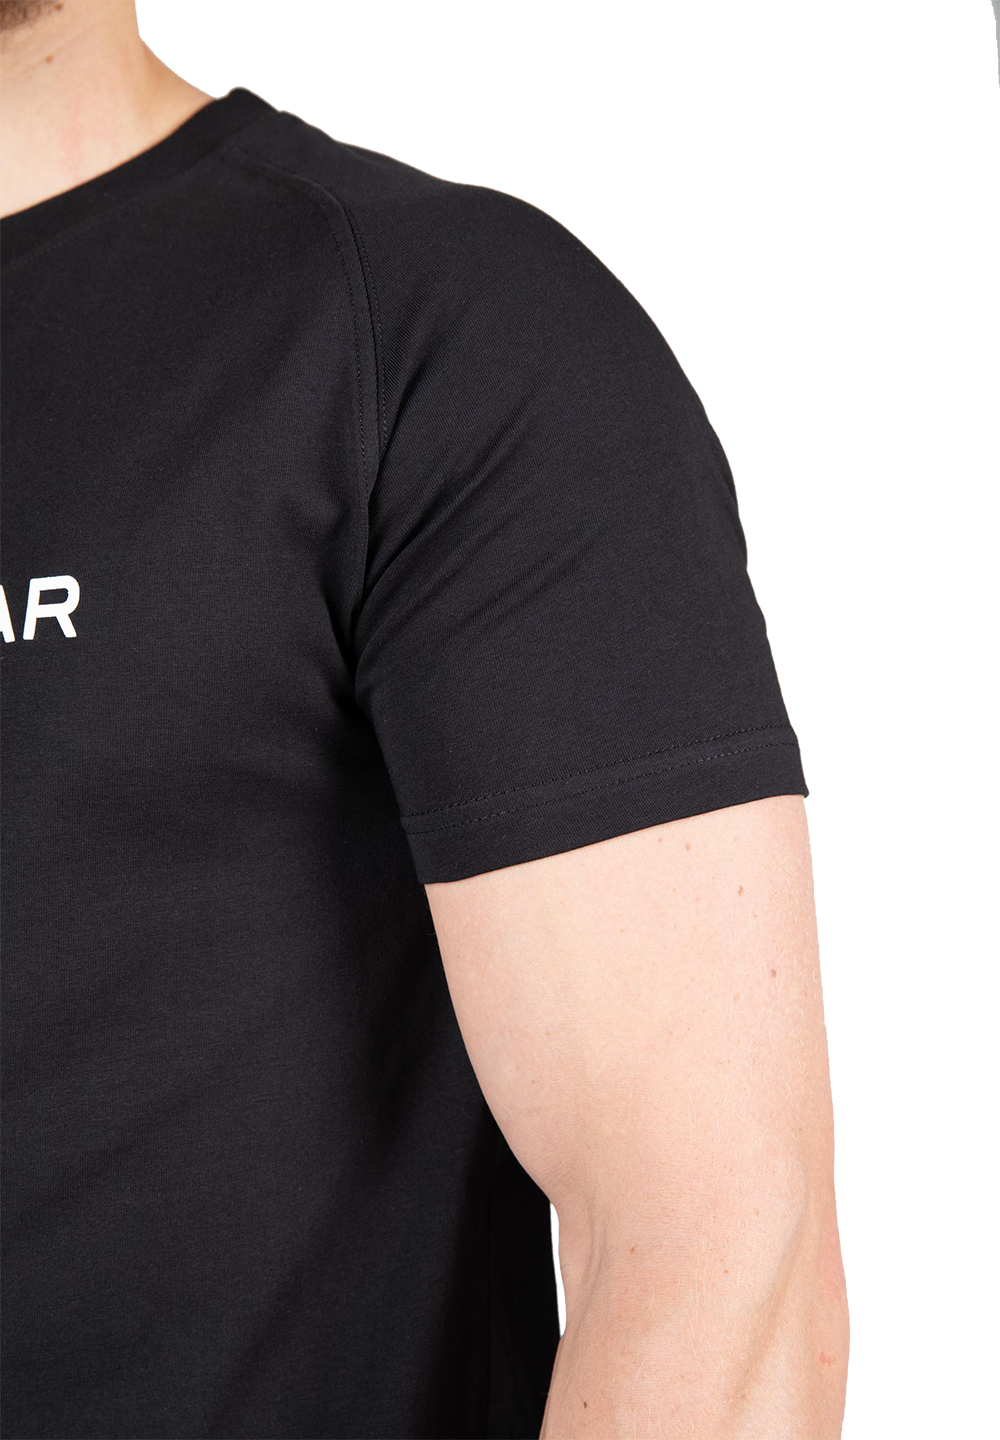 Футболка Davis T-Shirt – Black от Gorilla Wear